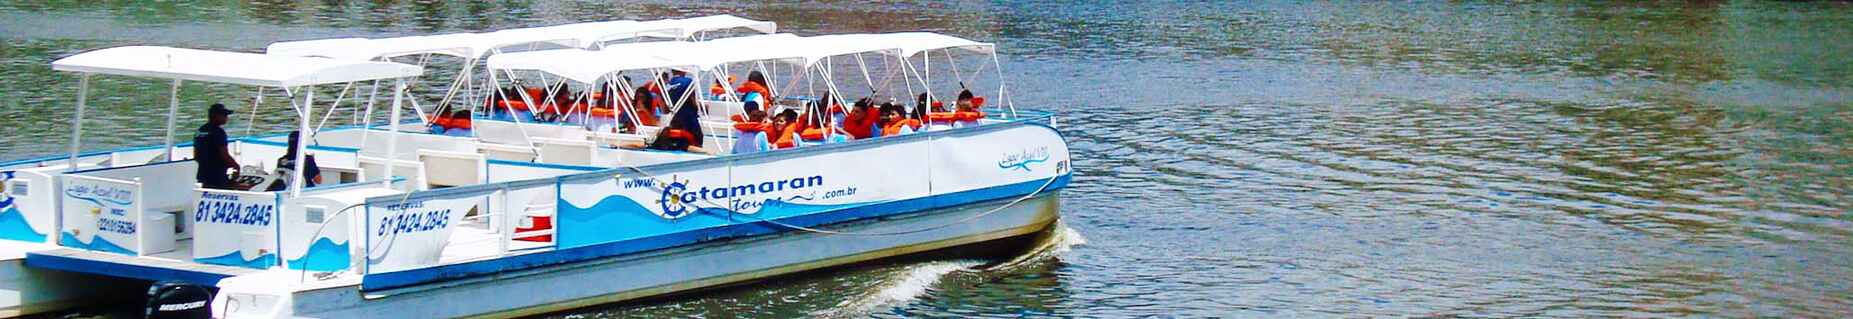 Catamaran Tours Visit Recife